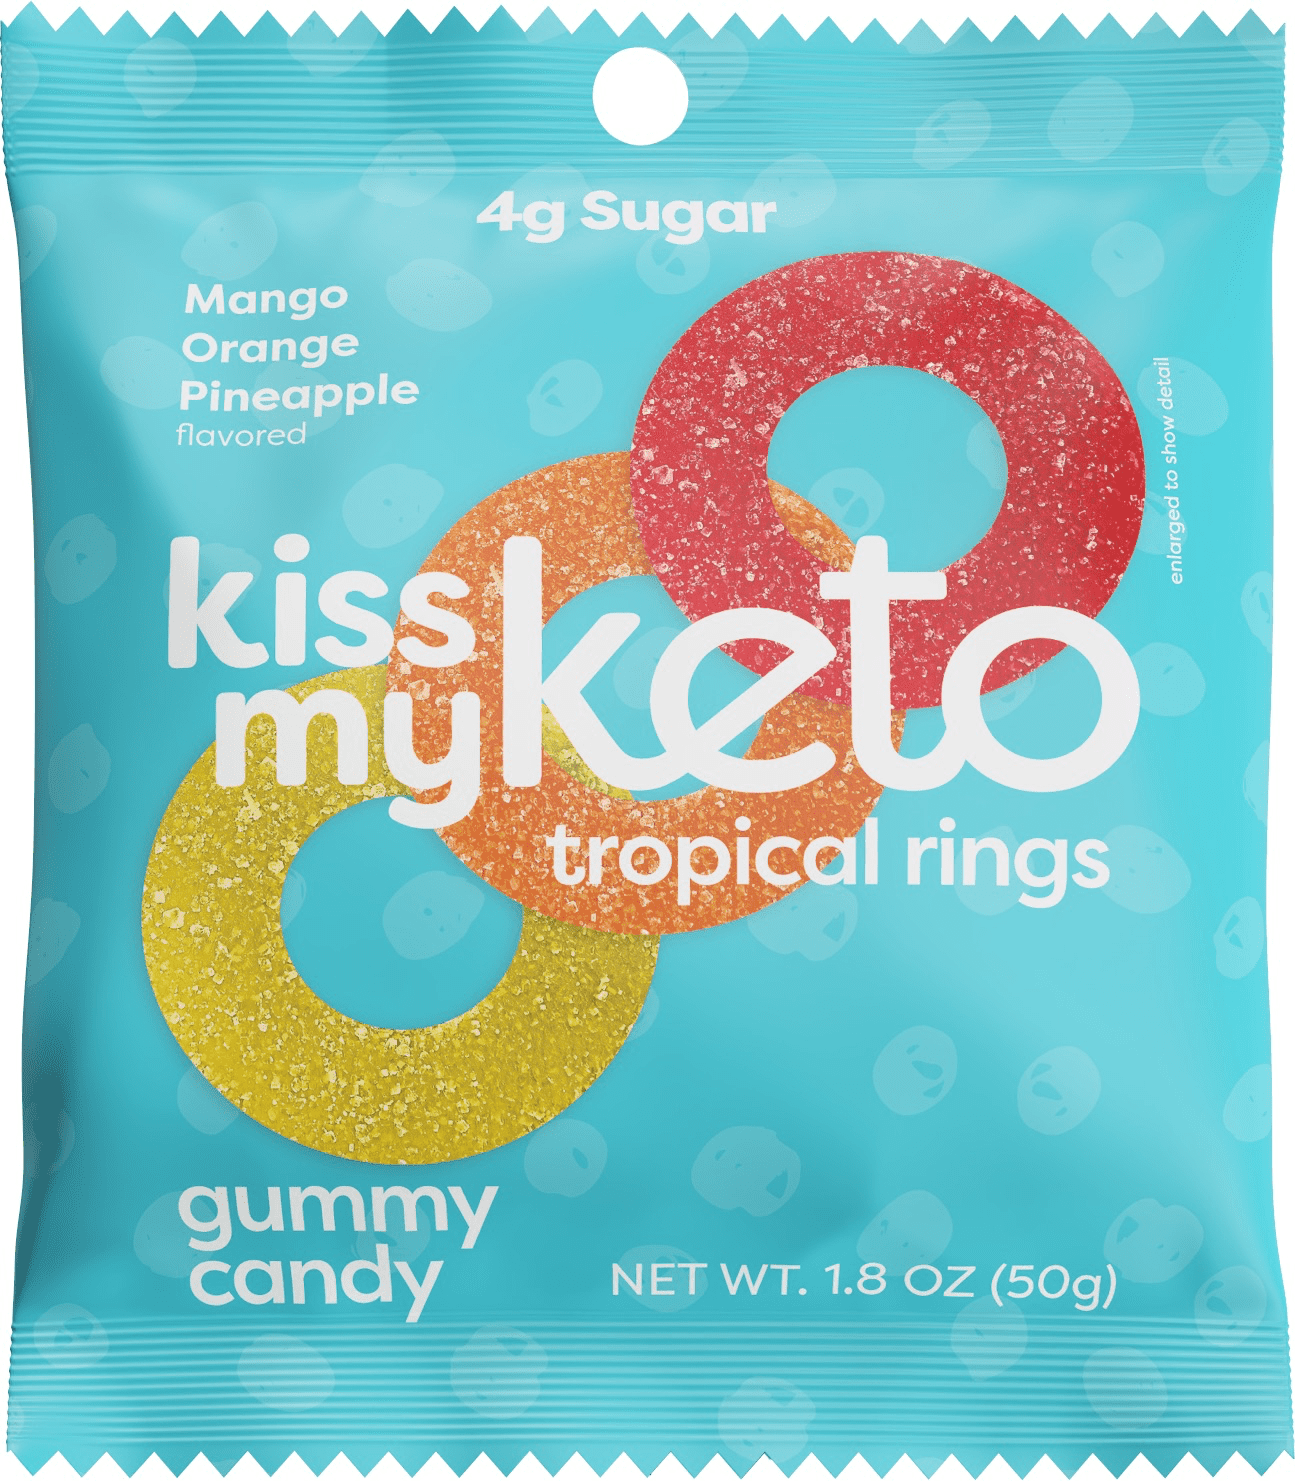 Kiss My Keto, Tropical Rings 16 innerpacks per case 1.8 oz